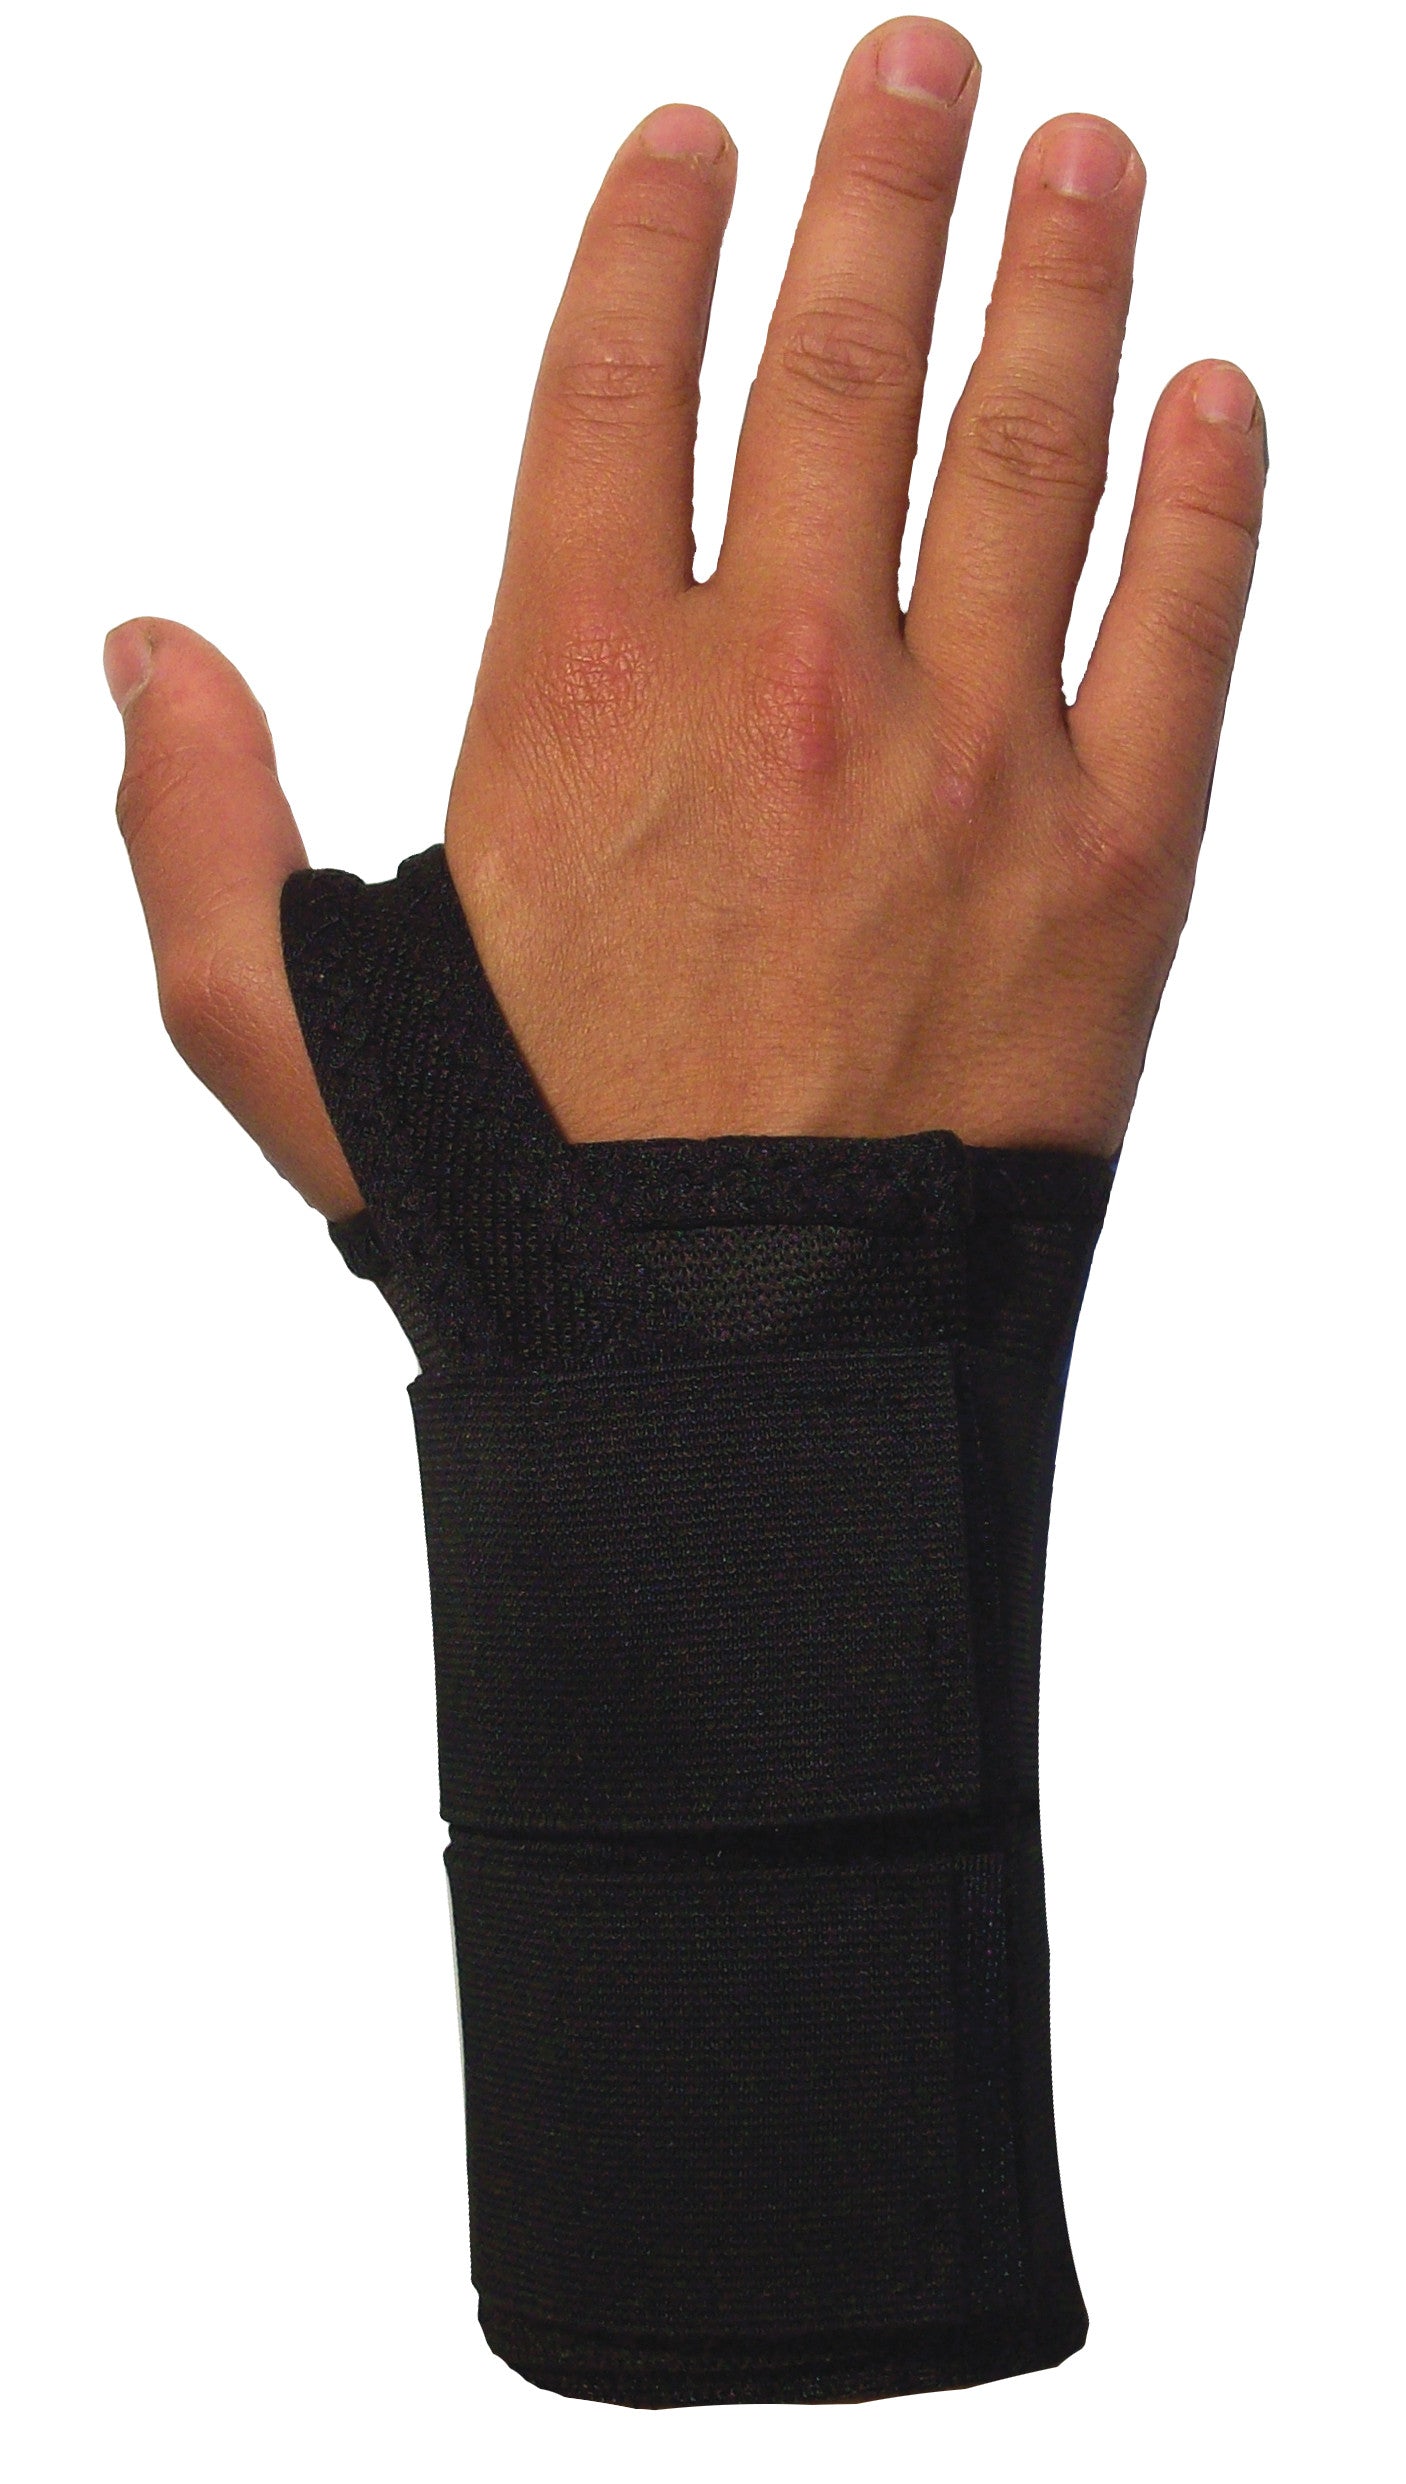 Wrist Support Ambidextrous-eSafety Supplies, Inc